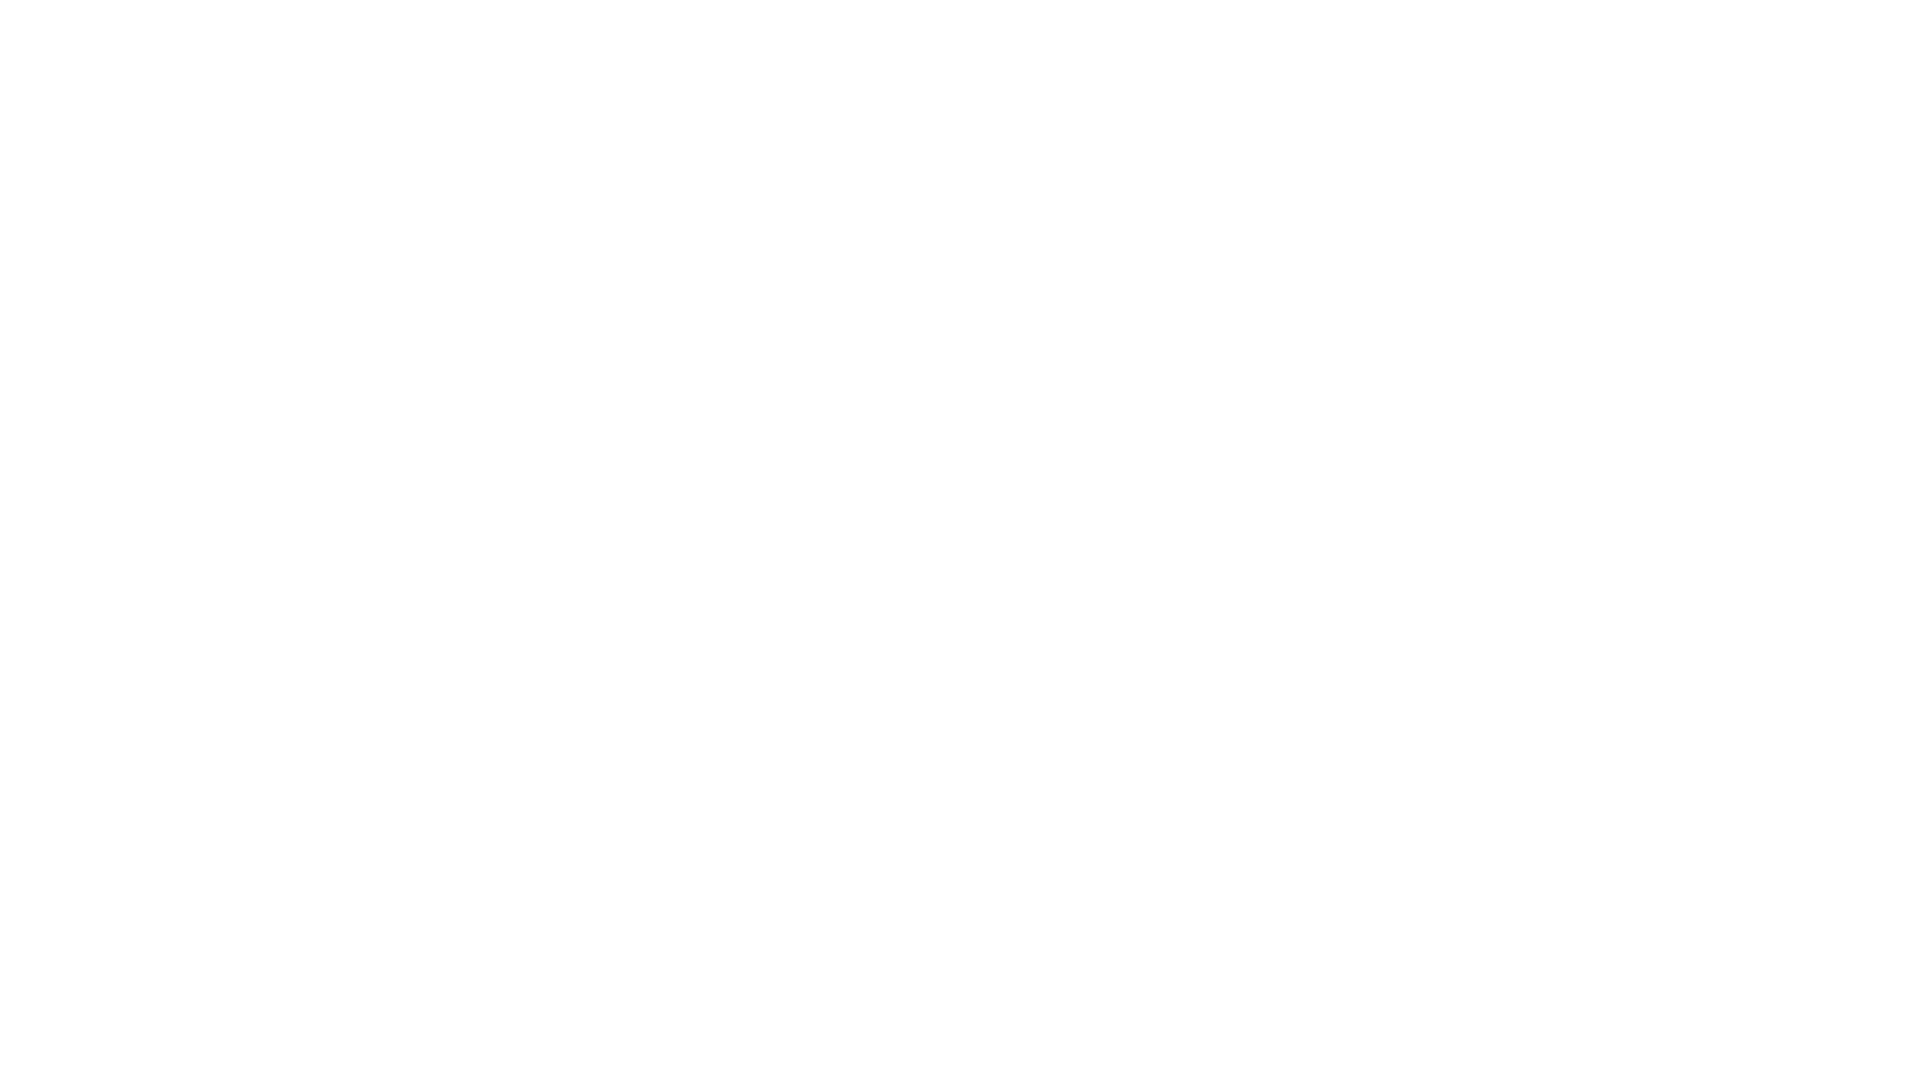 Logotipo Inspiration Gourmet negativo